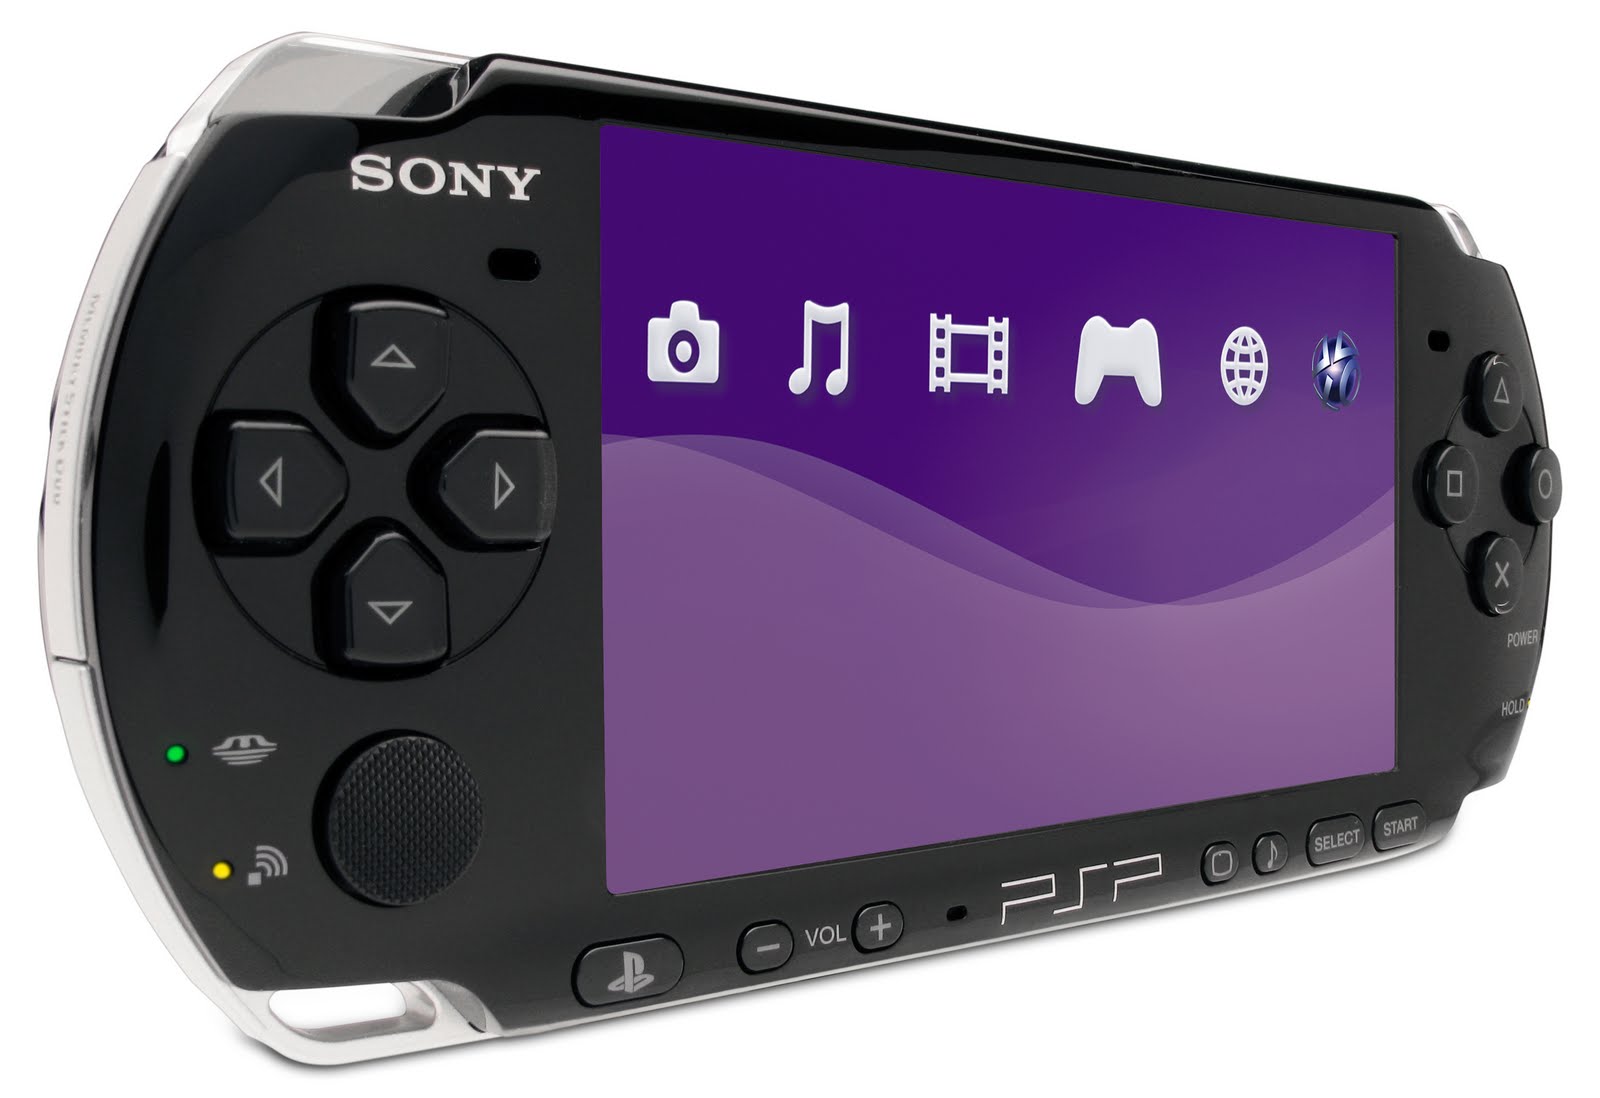 Sony PLAYSTATION Portable PSP 3000